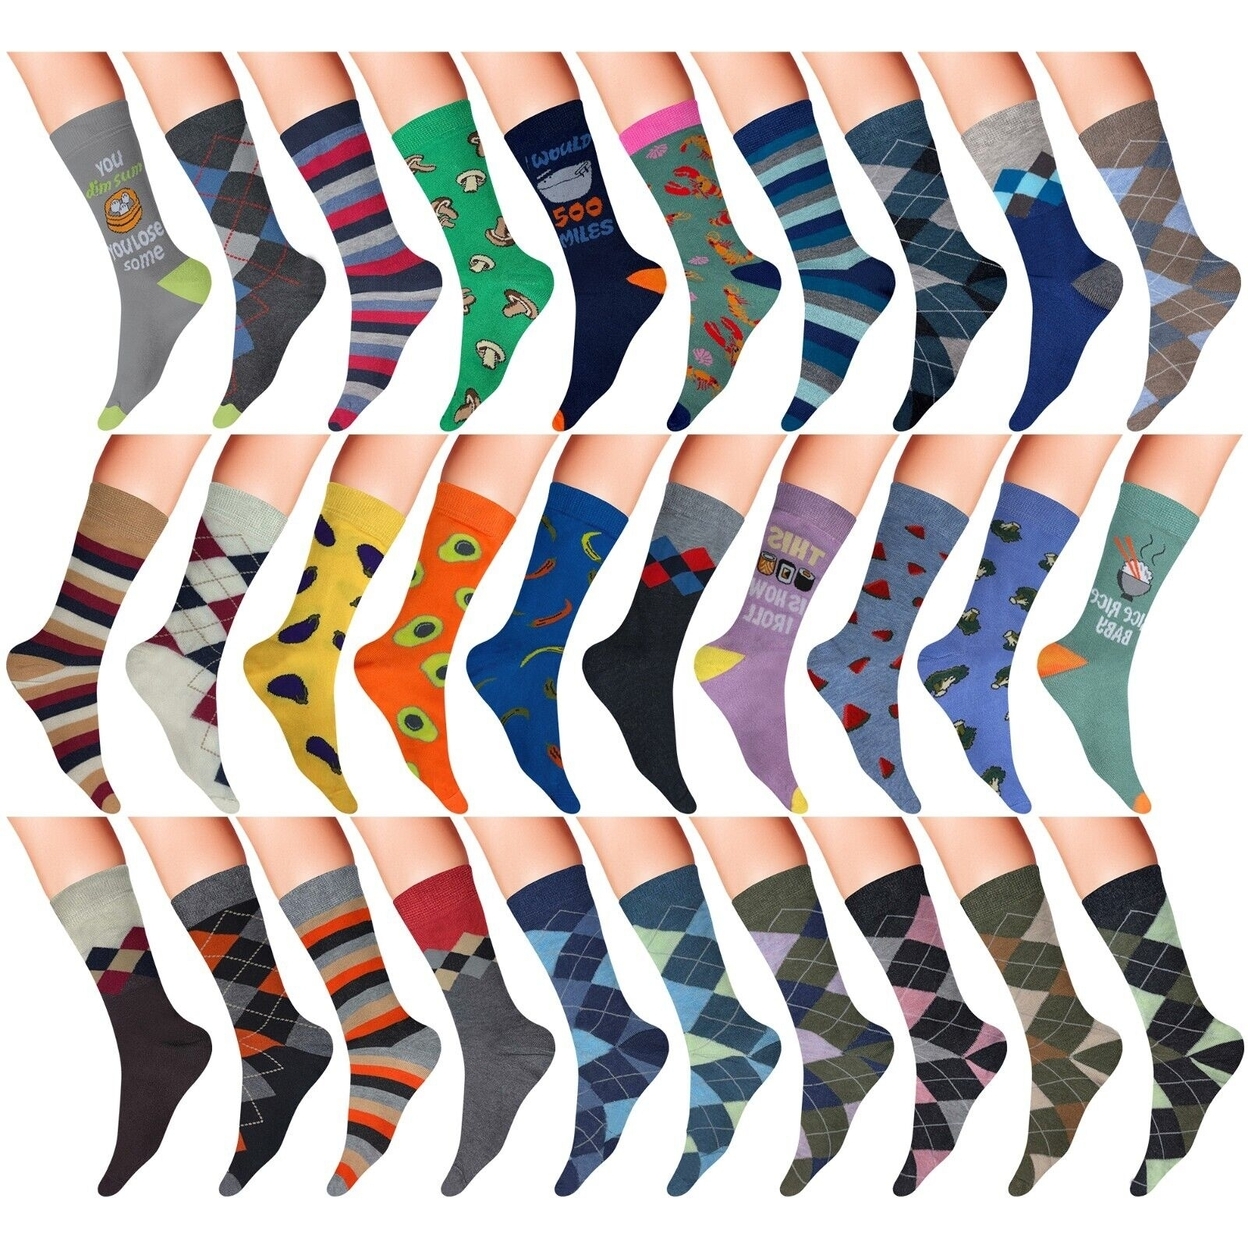 12-Pairs: Men's James Fiallo Premium Quality Fun Printed Dress Socks - Fun Pattern